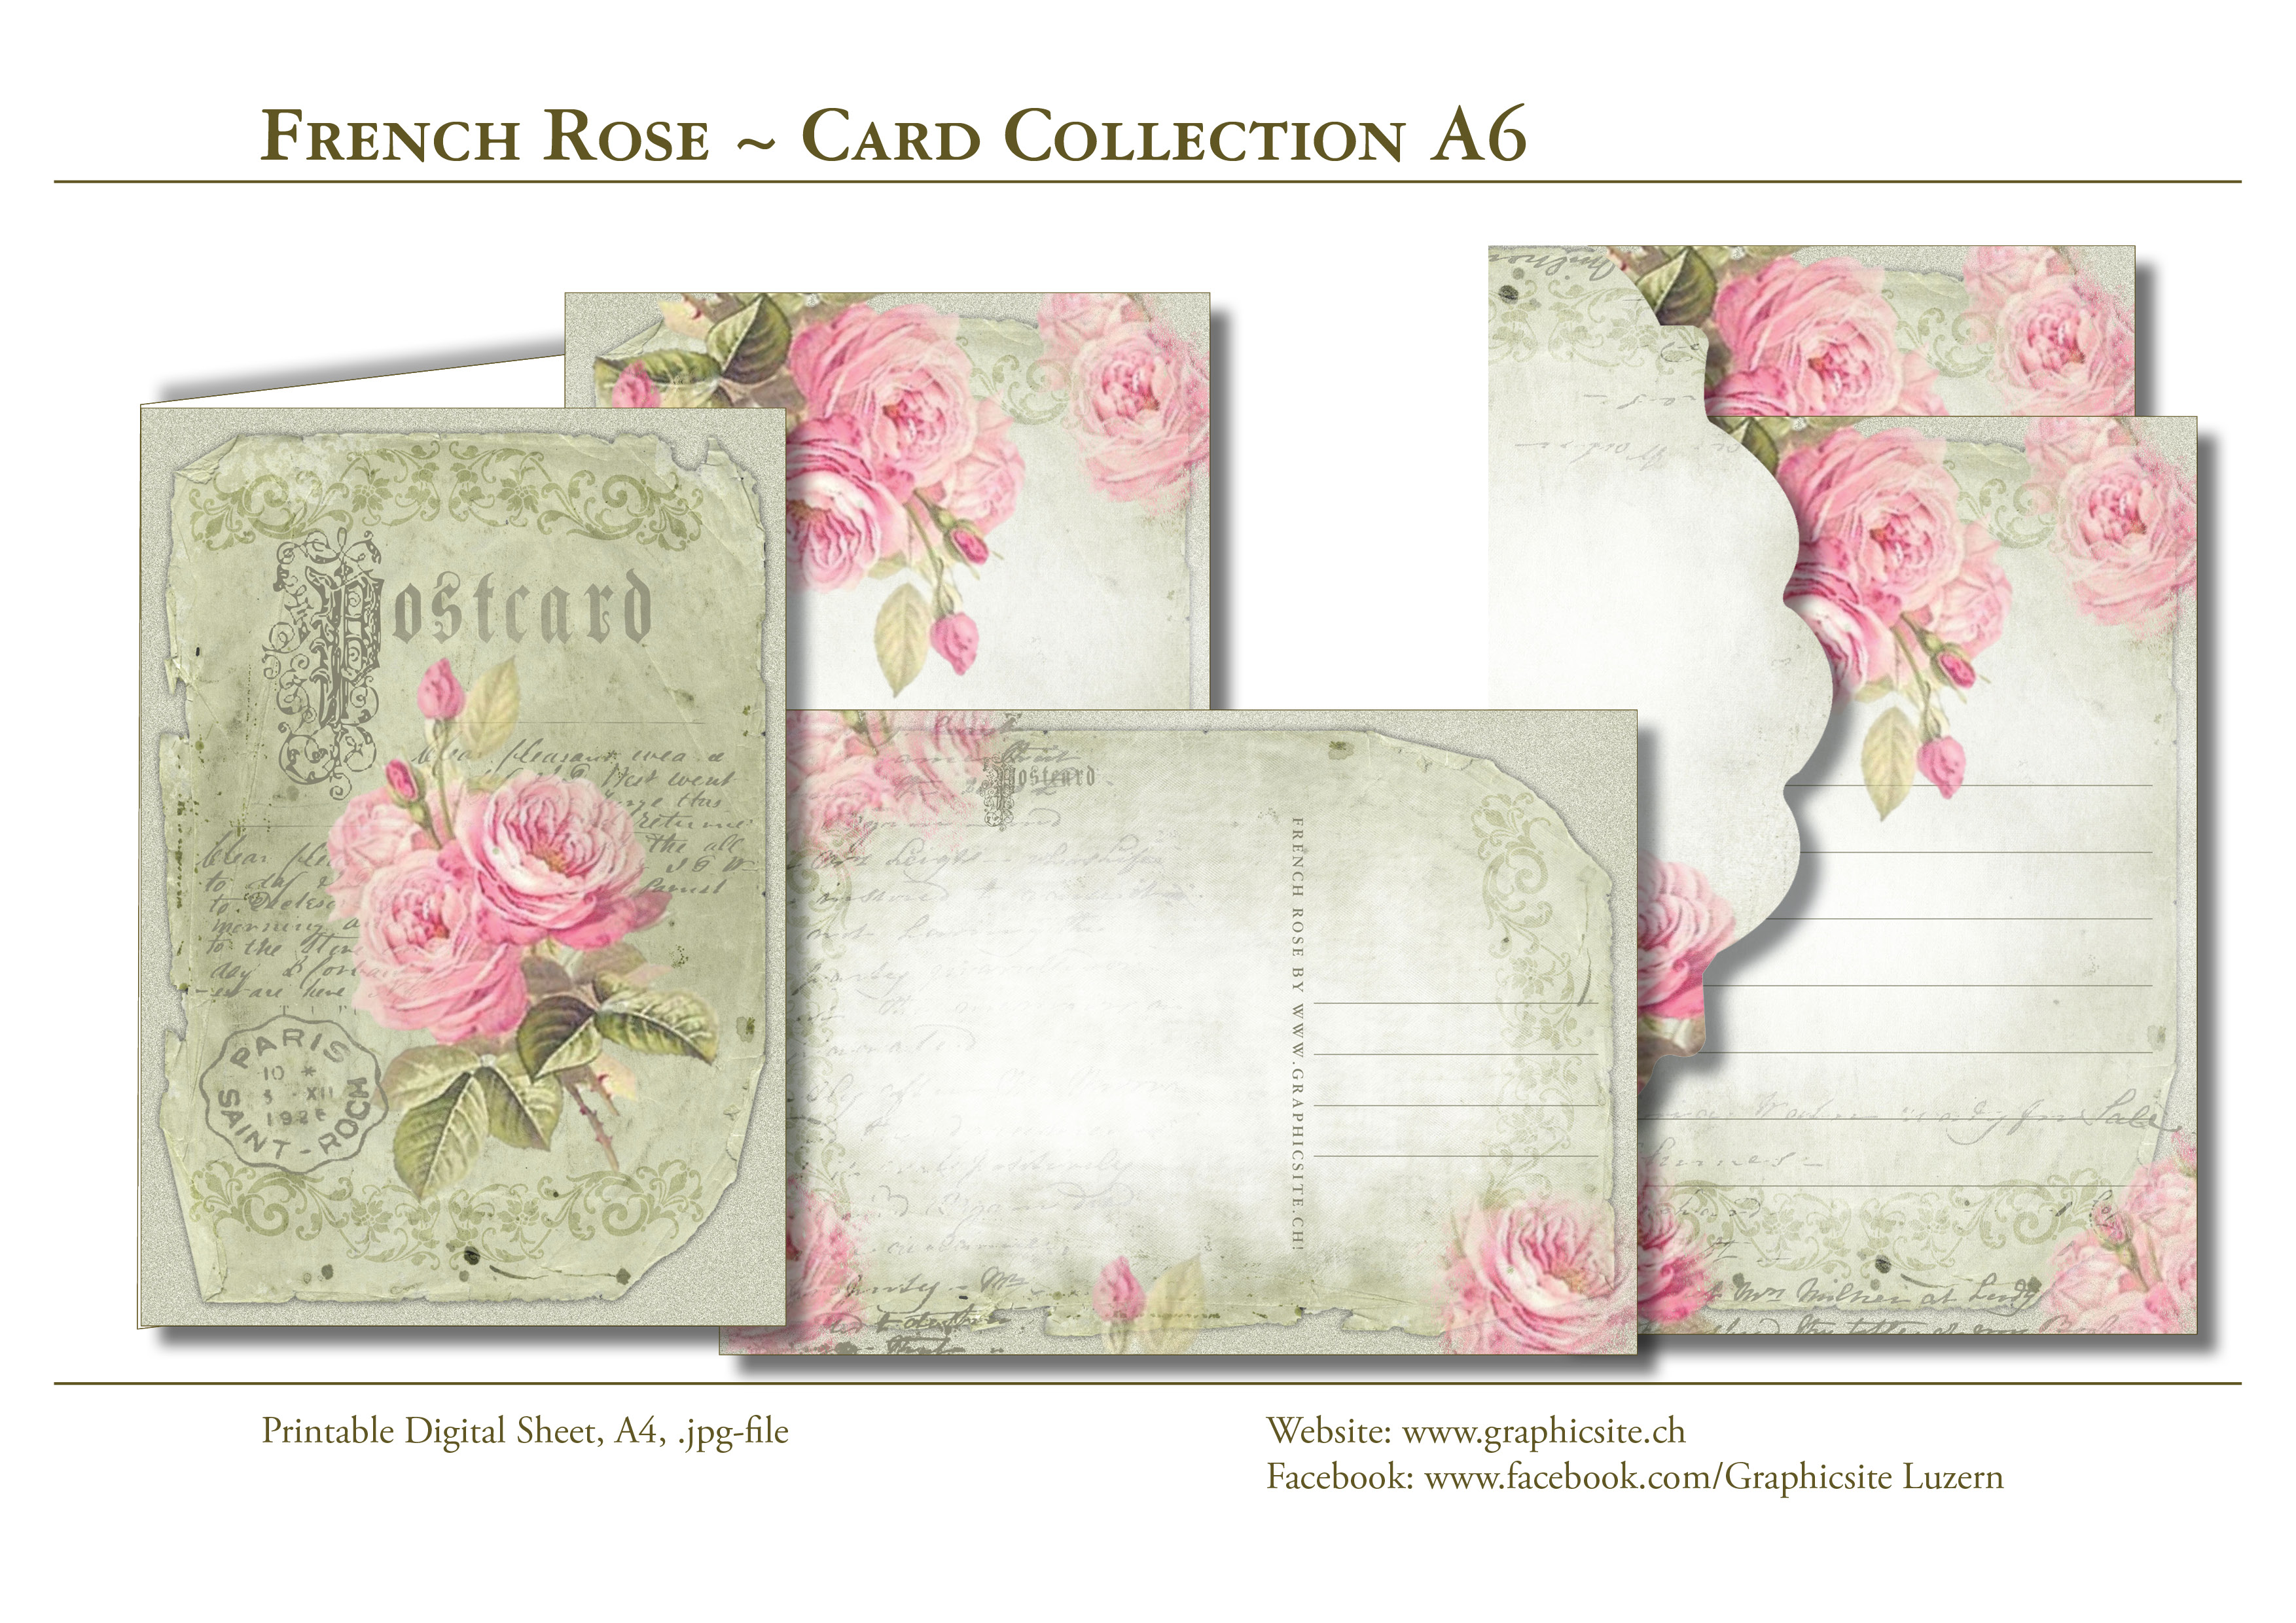 Printable, Digital, Sheets, Greeting Cards, Notecards, Envelop, Postcard, French Rose, Rose, Roses, Flowers, Floral, Vintage, Romantic, Graphic Design, Luzern,